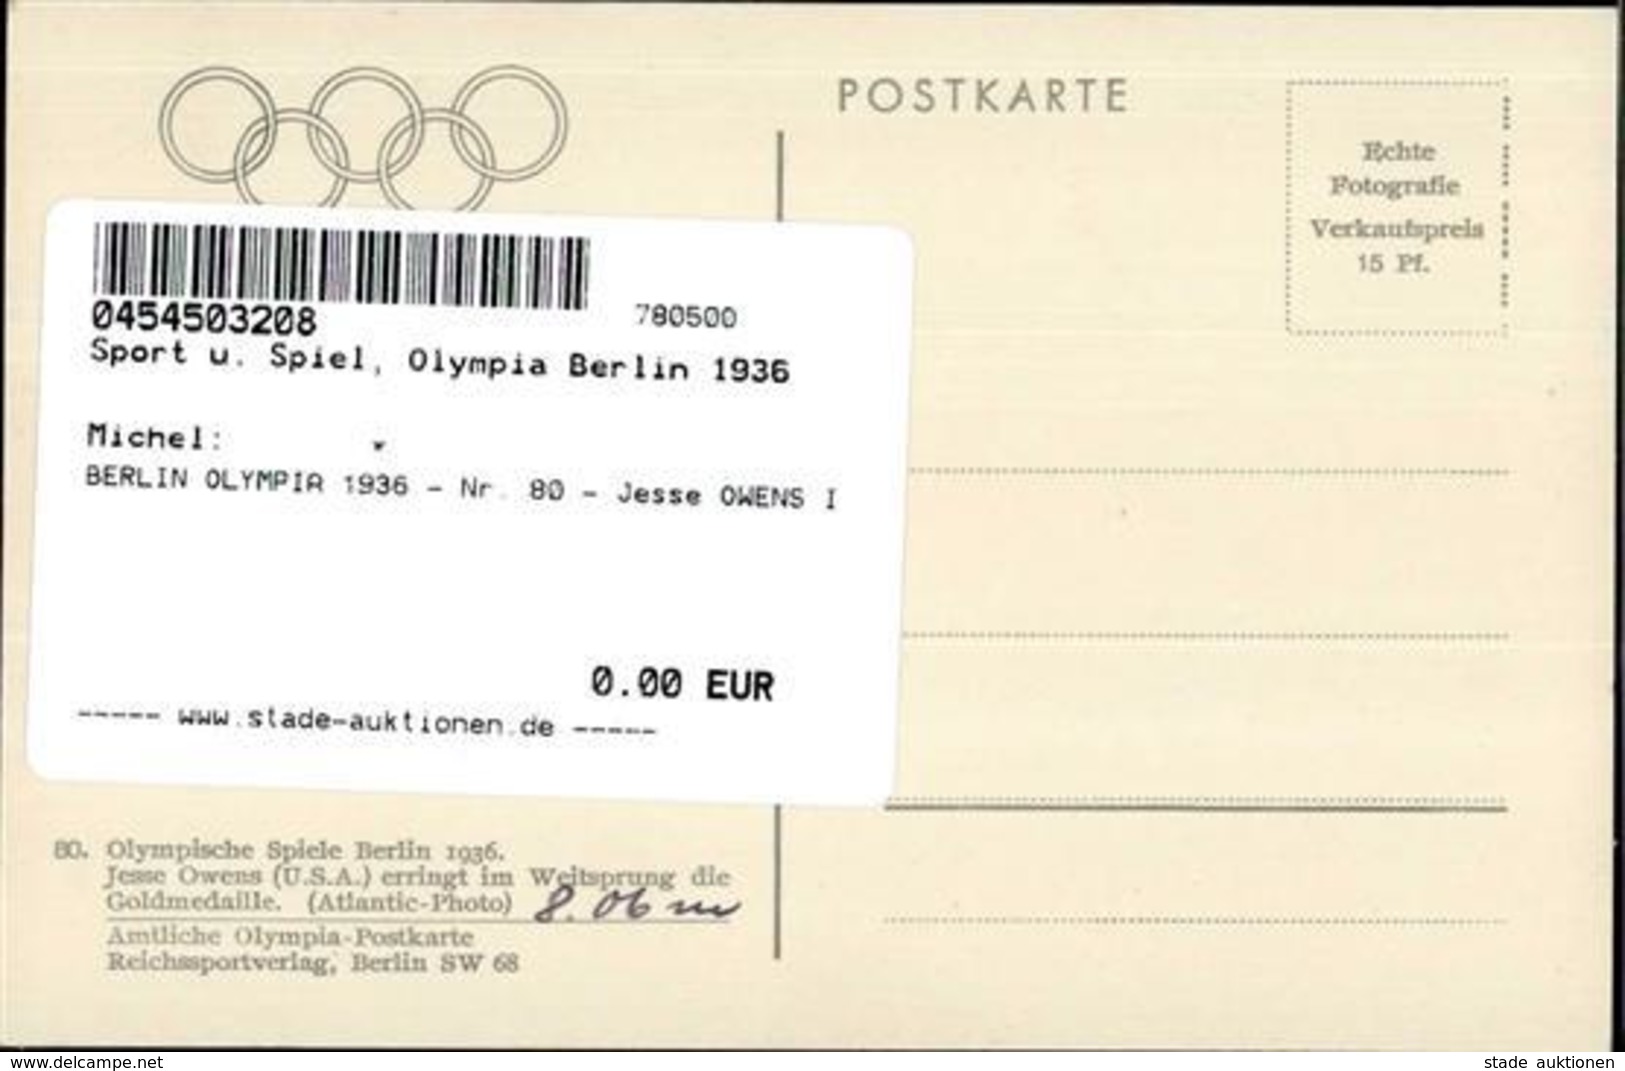 BERLIN OLYMPIA 1936 - Nr. 80 - Jesse OWENS I - Jeux Olympiques